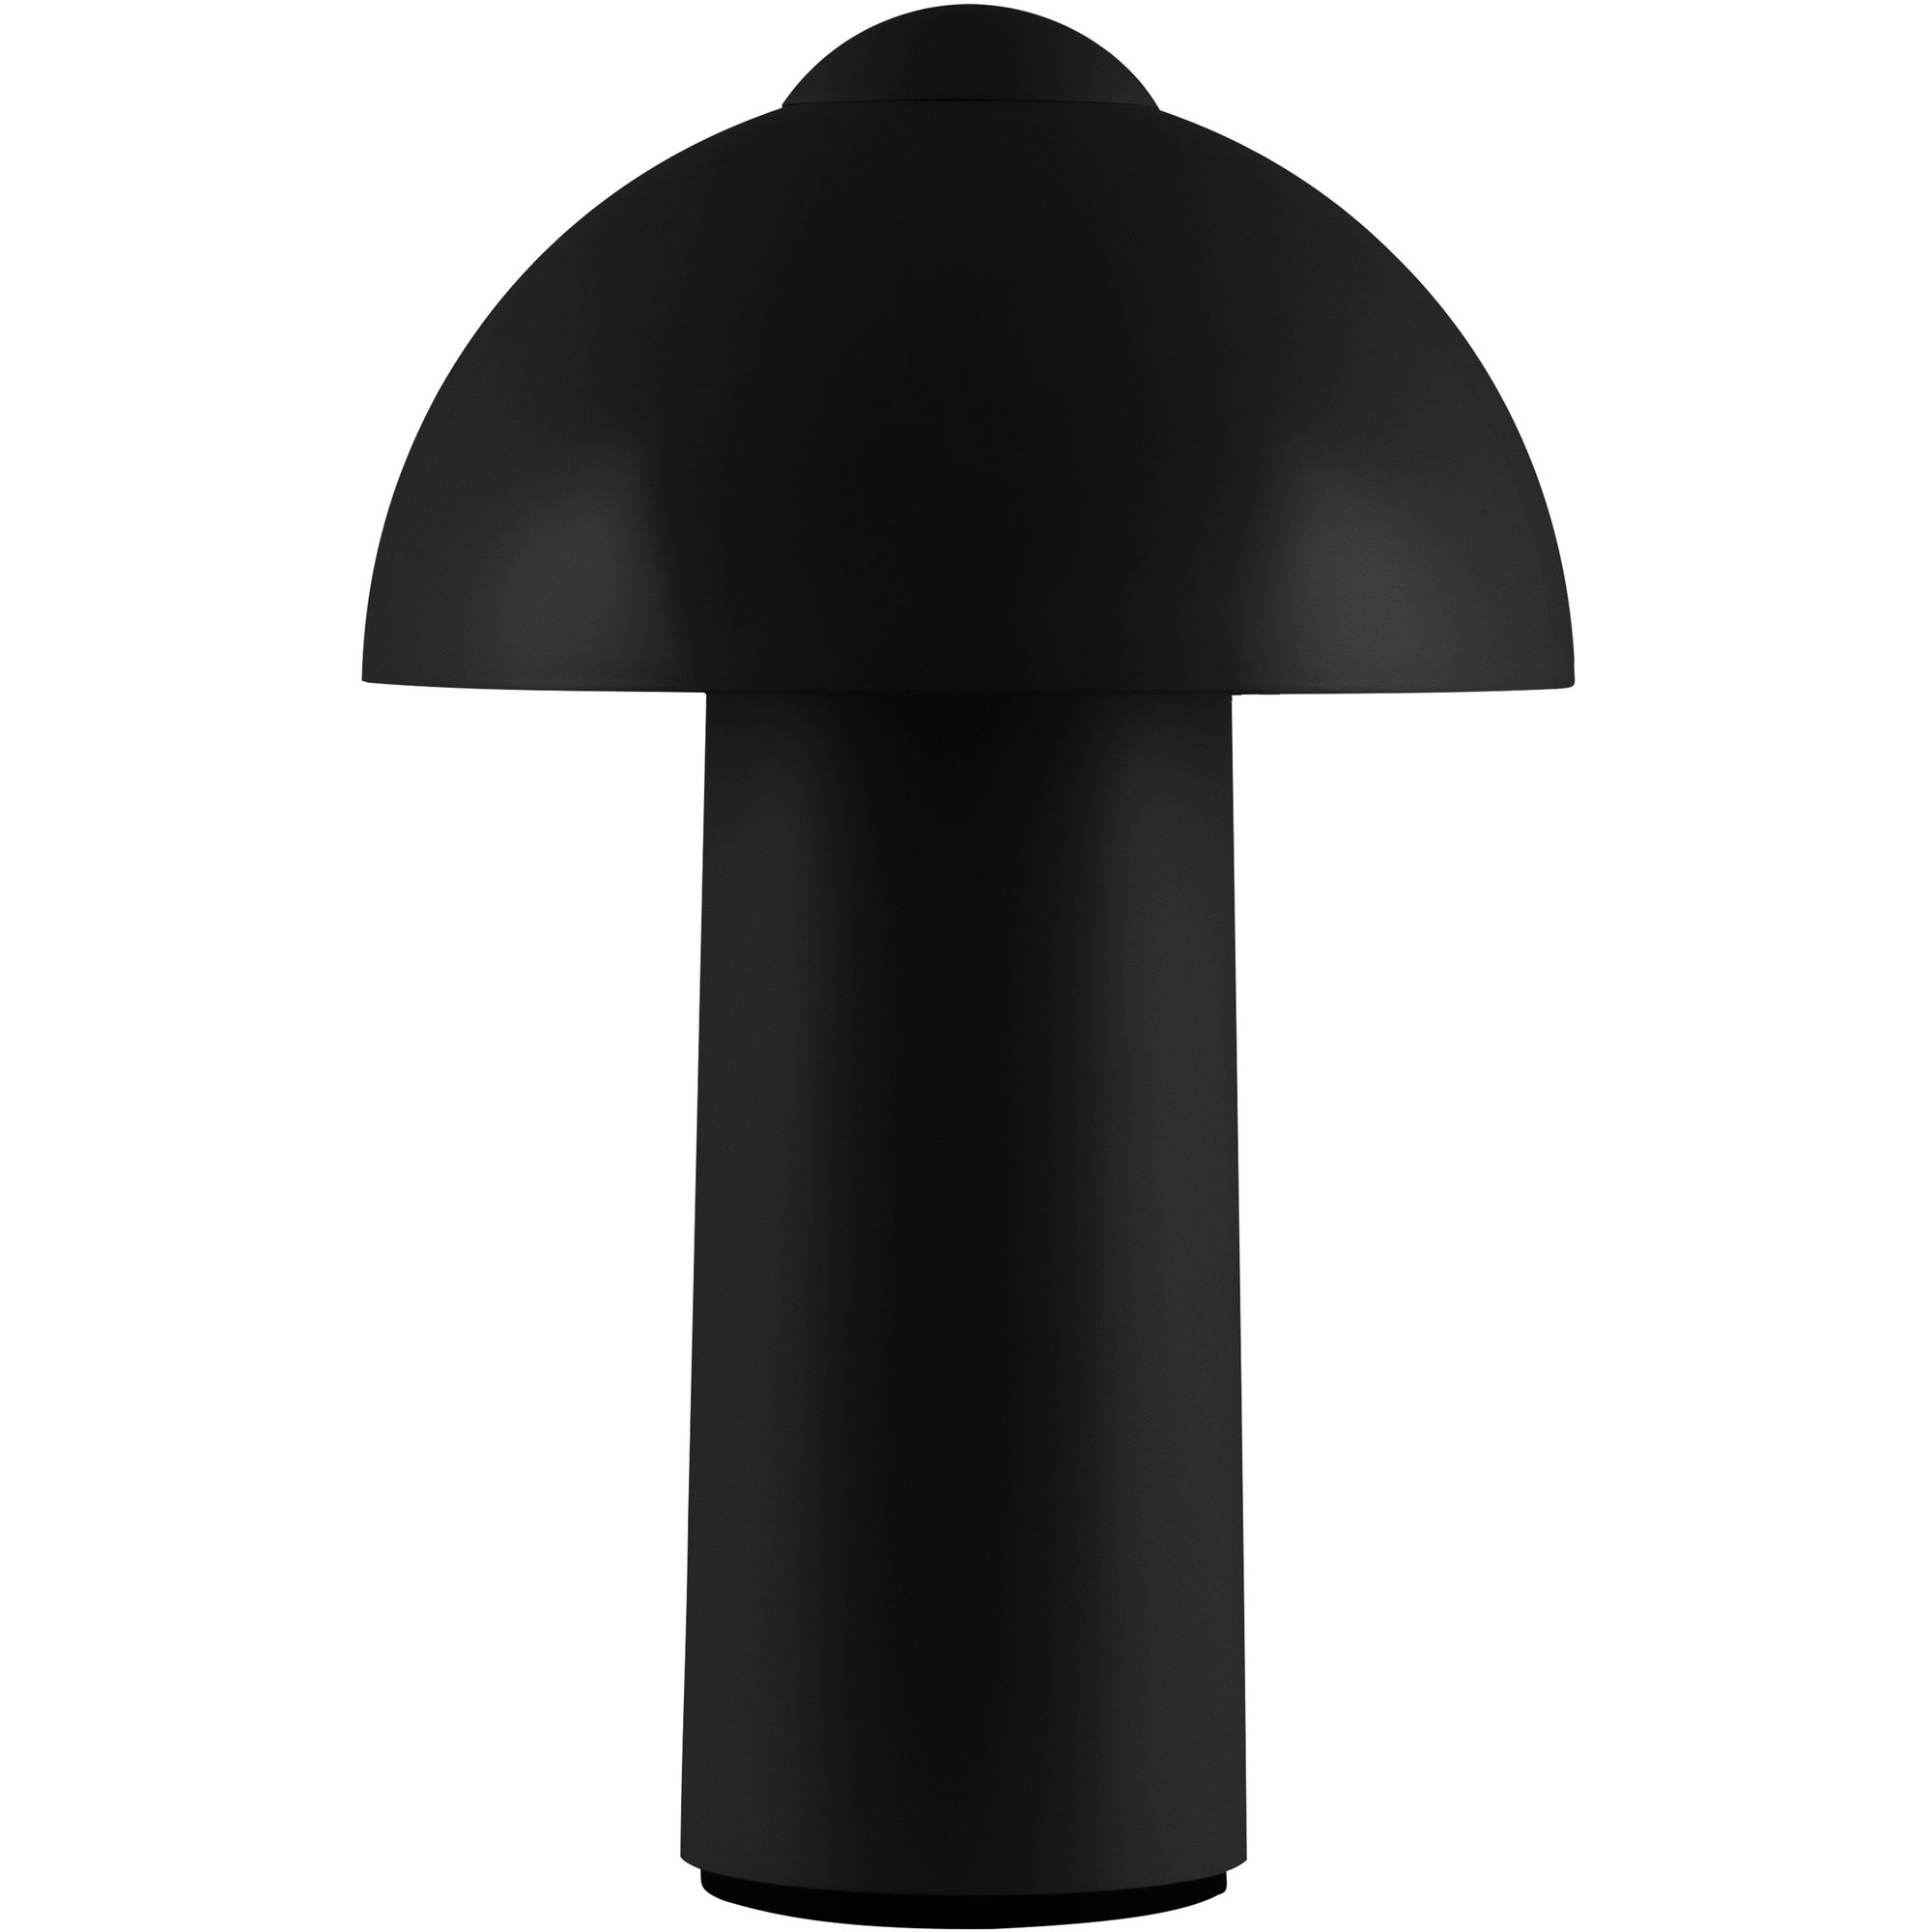 Globen Lighting Buddy IP44 bærbar bordlampe svart